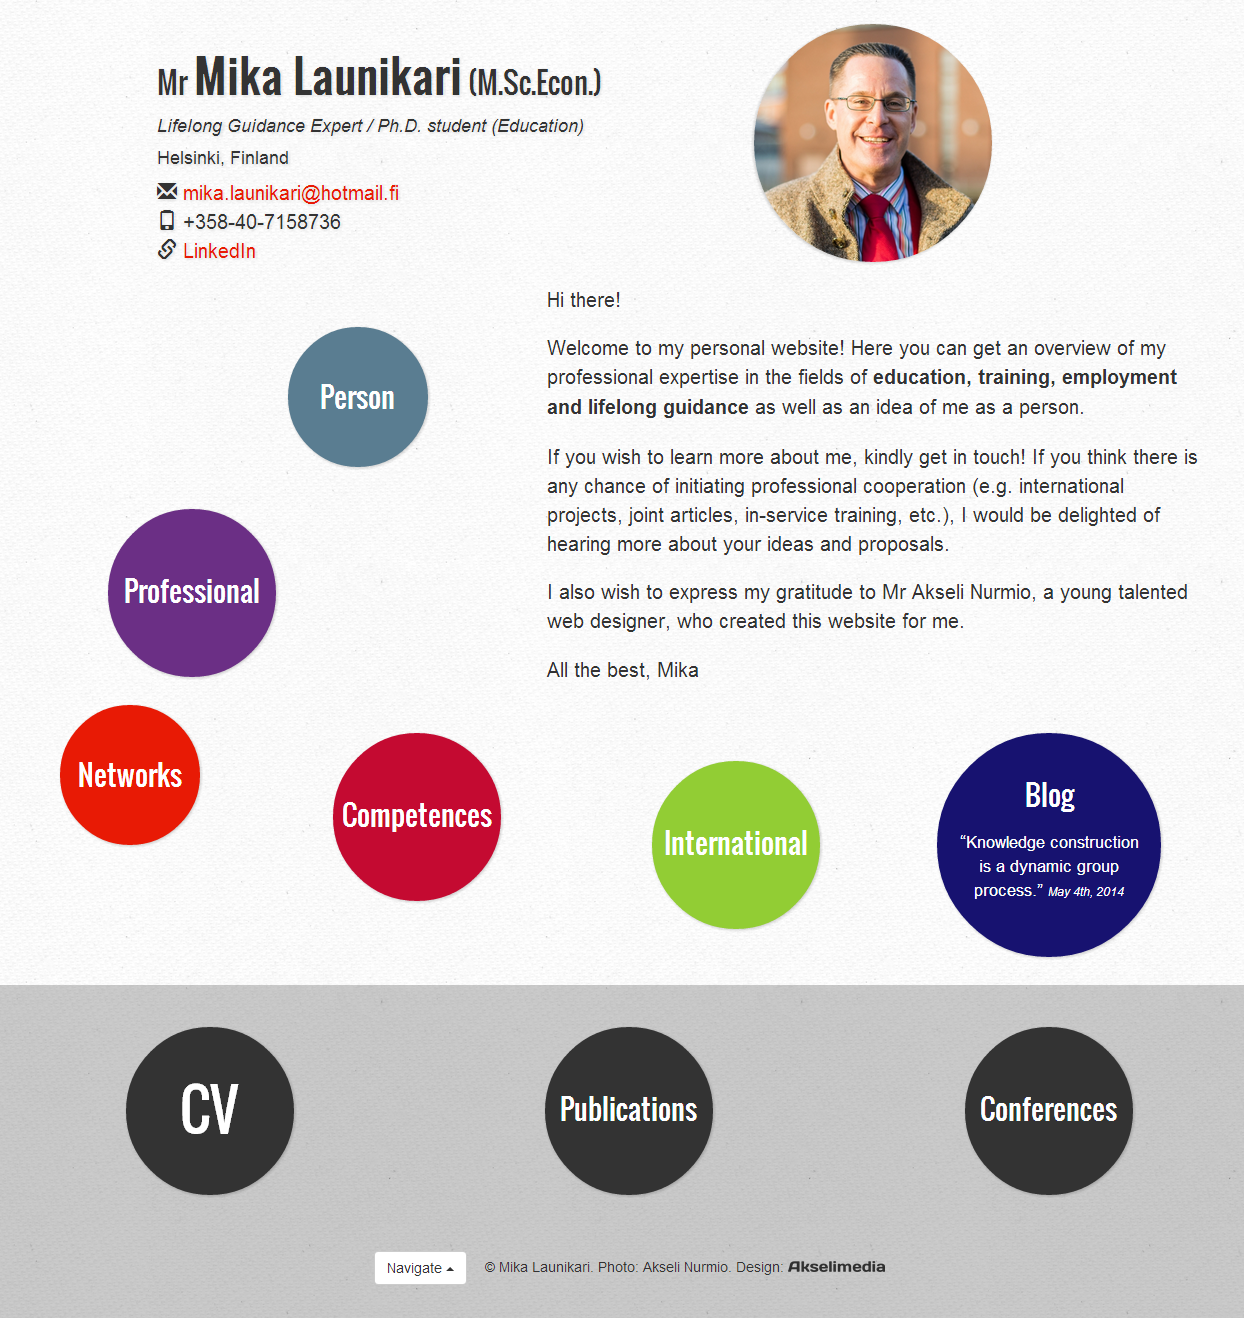 Mika Launikari's website